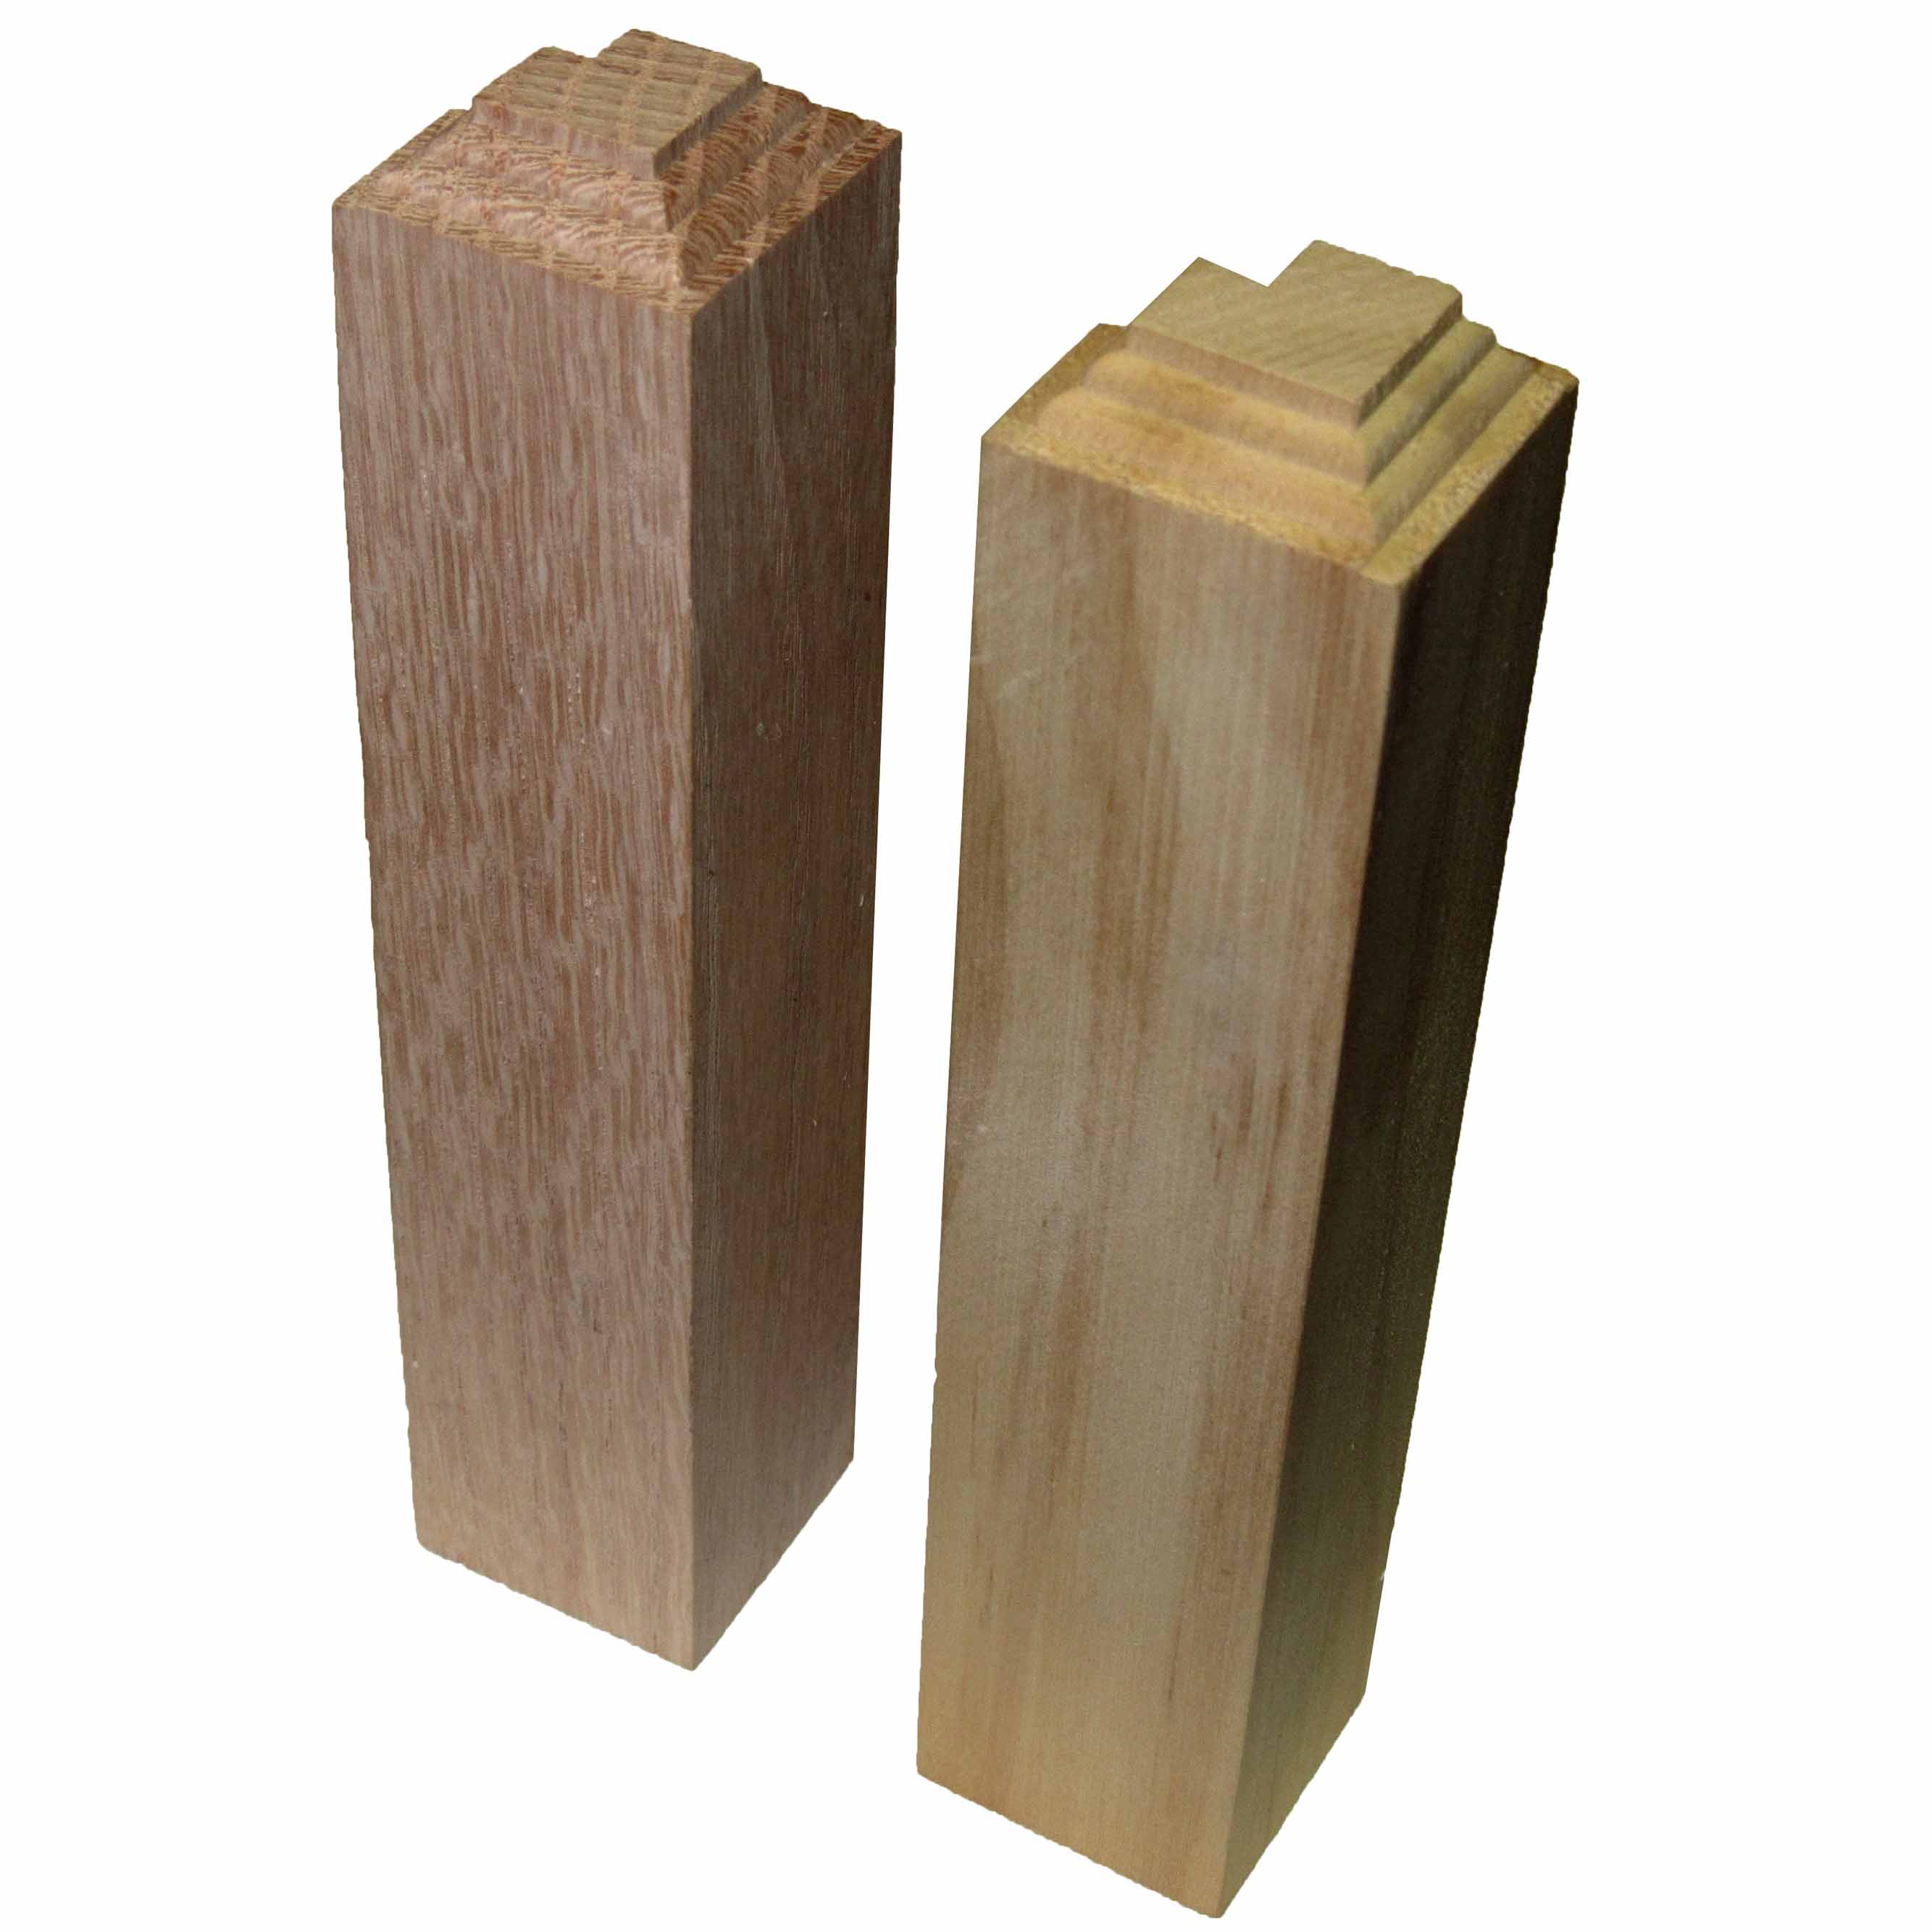 Tempered Hardboard | Capitol City Lumber